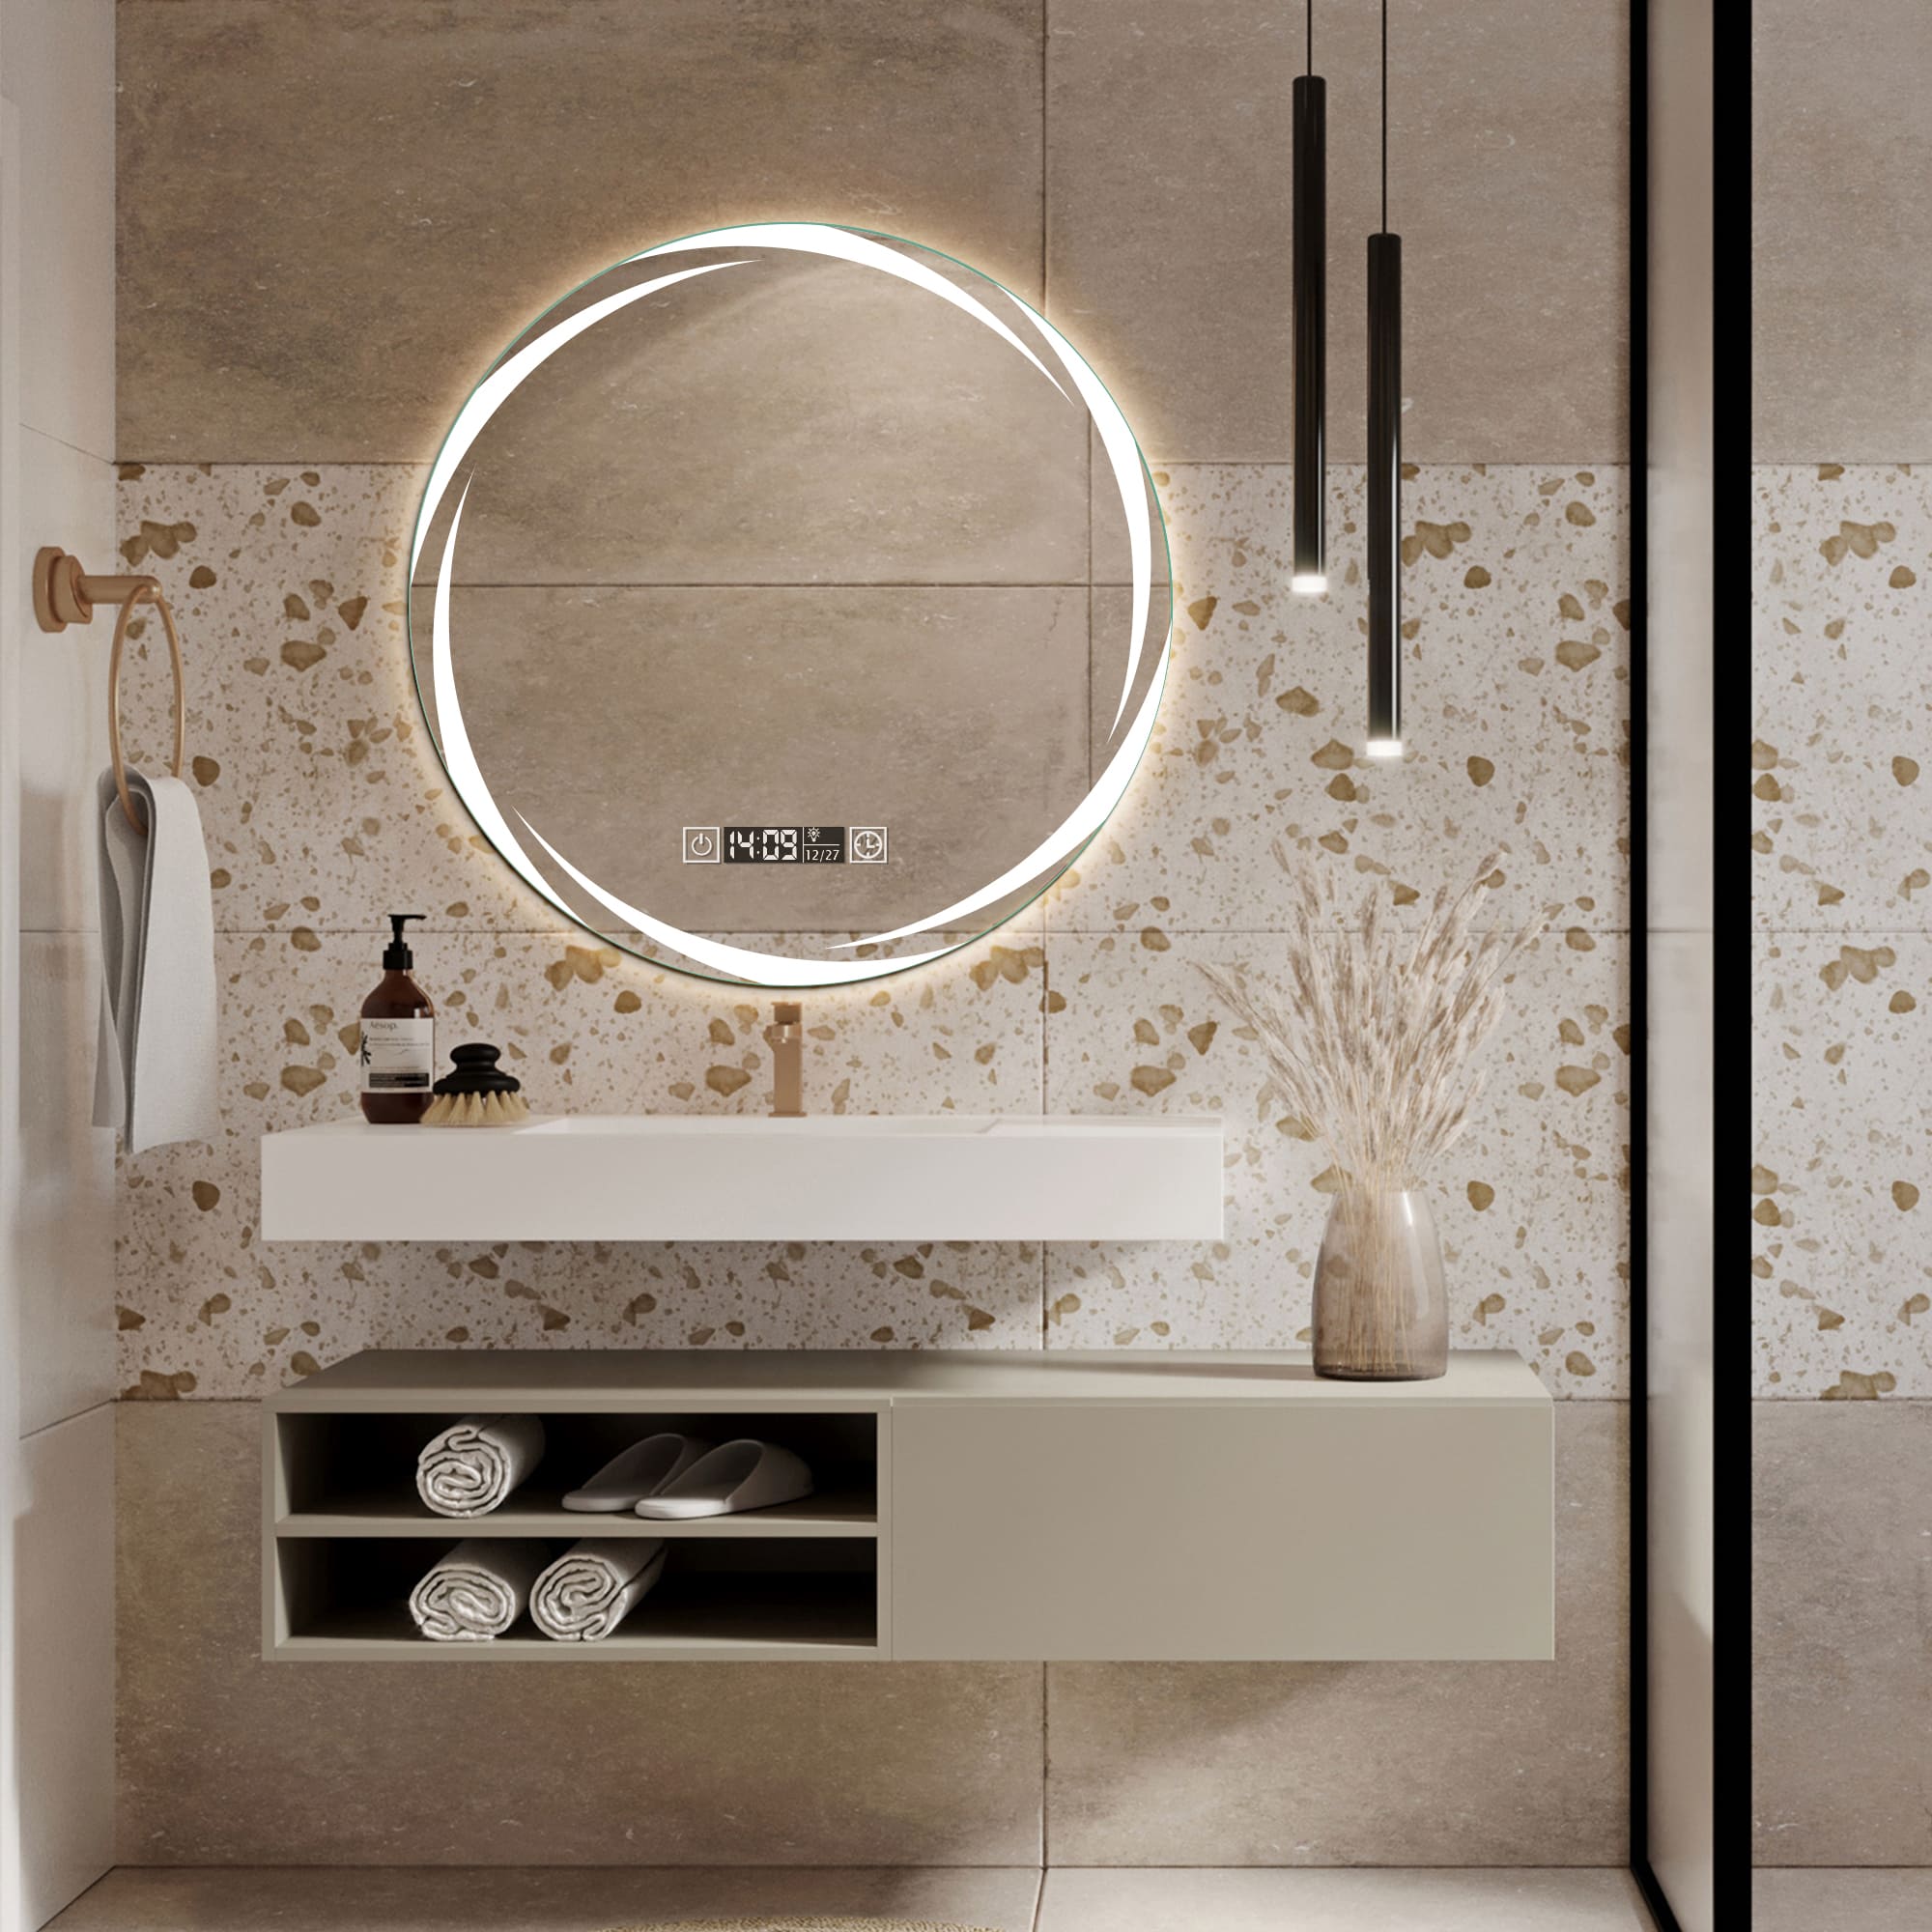 ORION LED mirror for bathroom